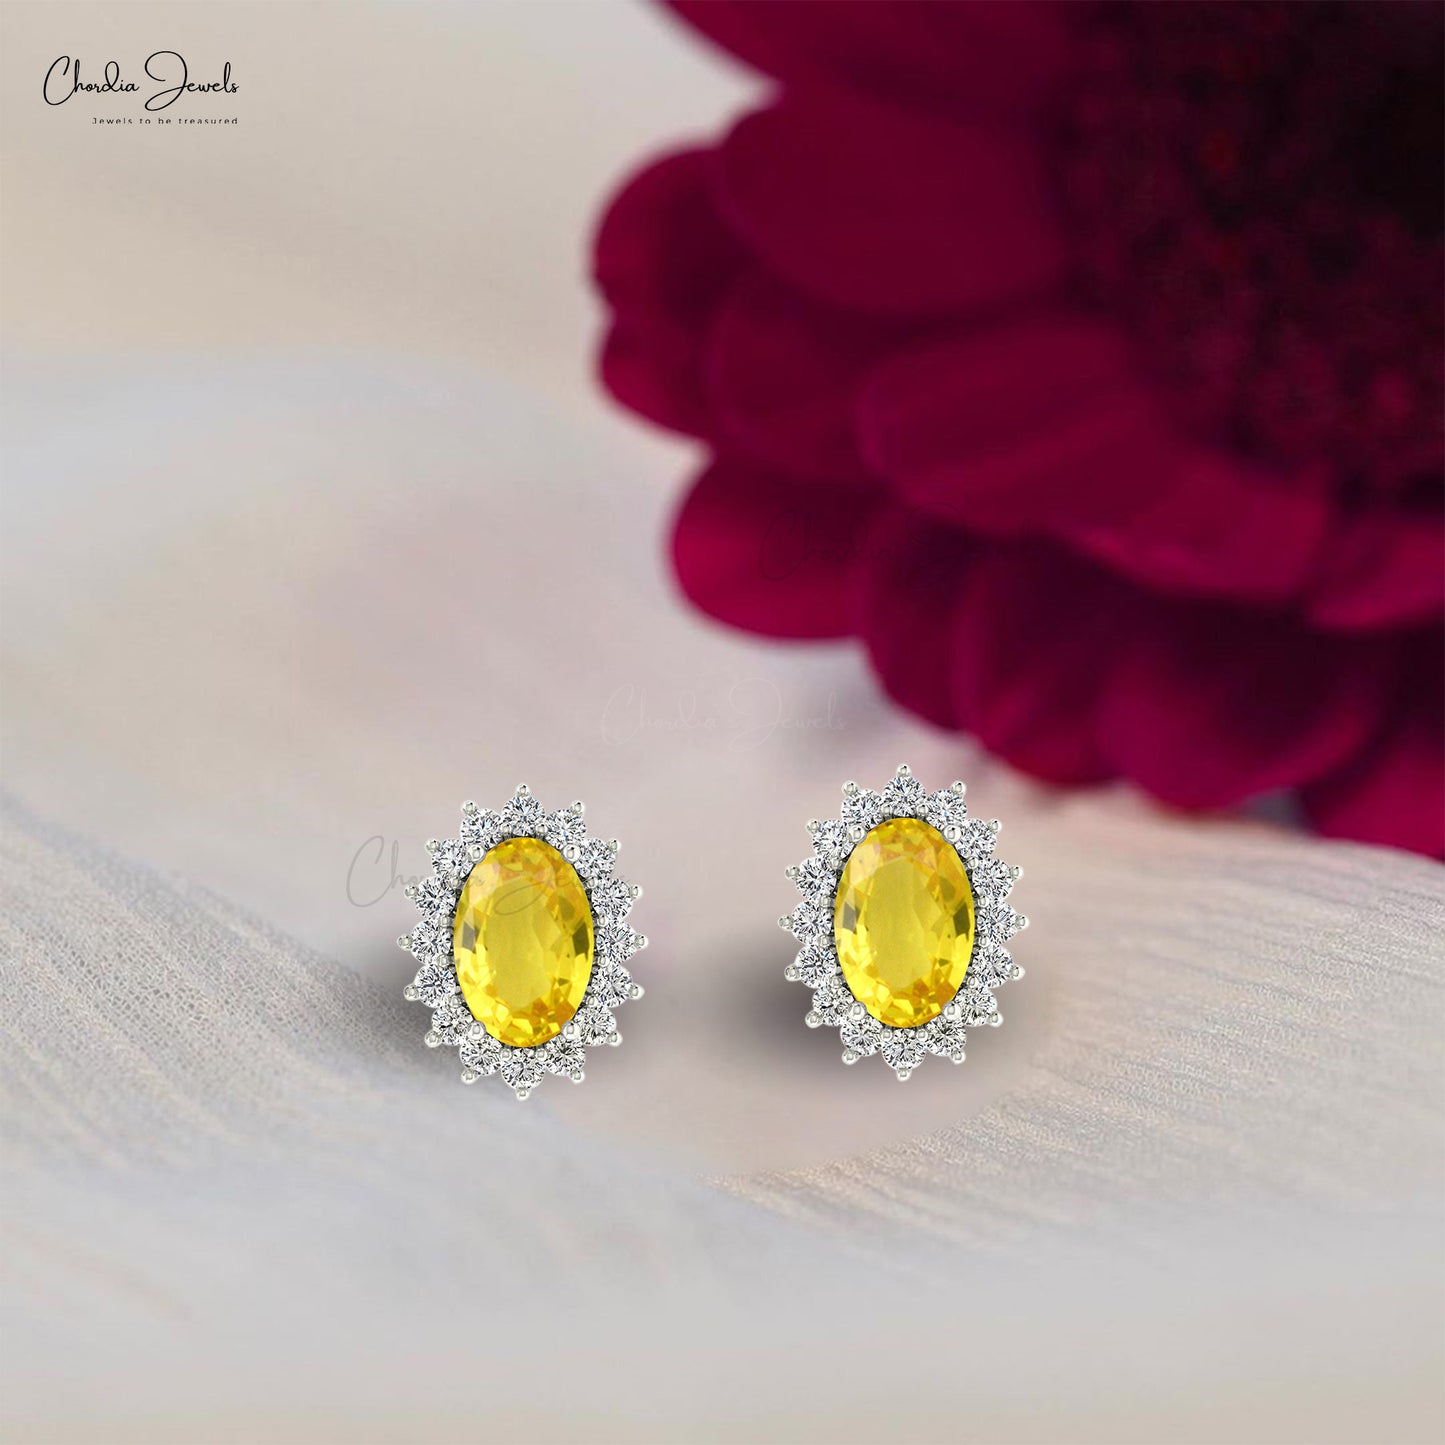 Real 14k Gold Genuine Yellow Sapphire Earrings 1.16 Ct Oval Gemstone Halo Diamond Earrings Handmade Personalized Gift For Women